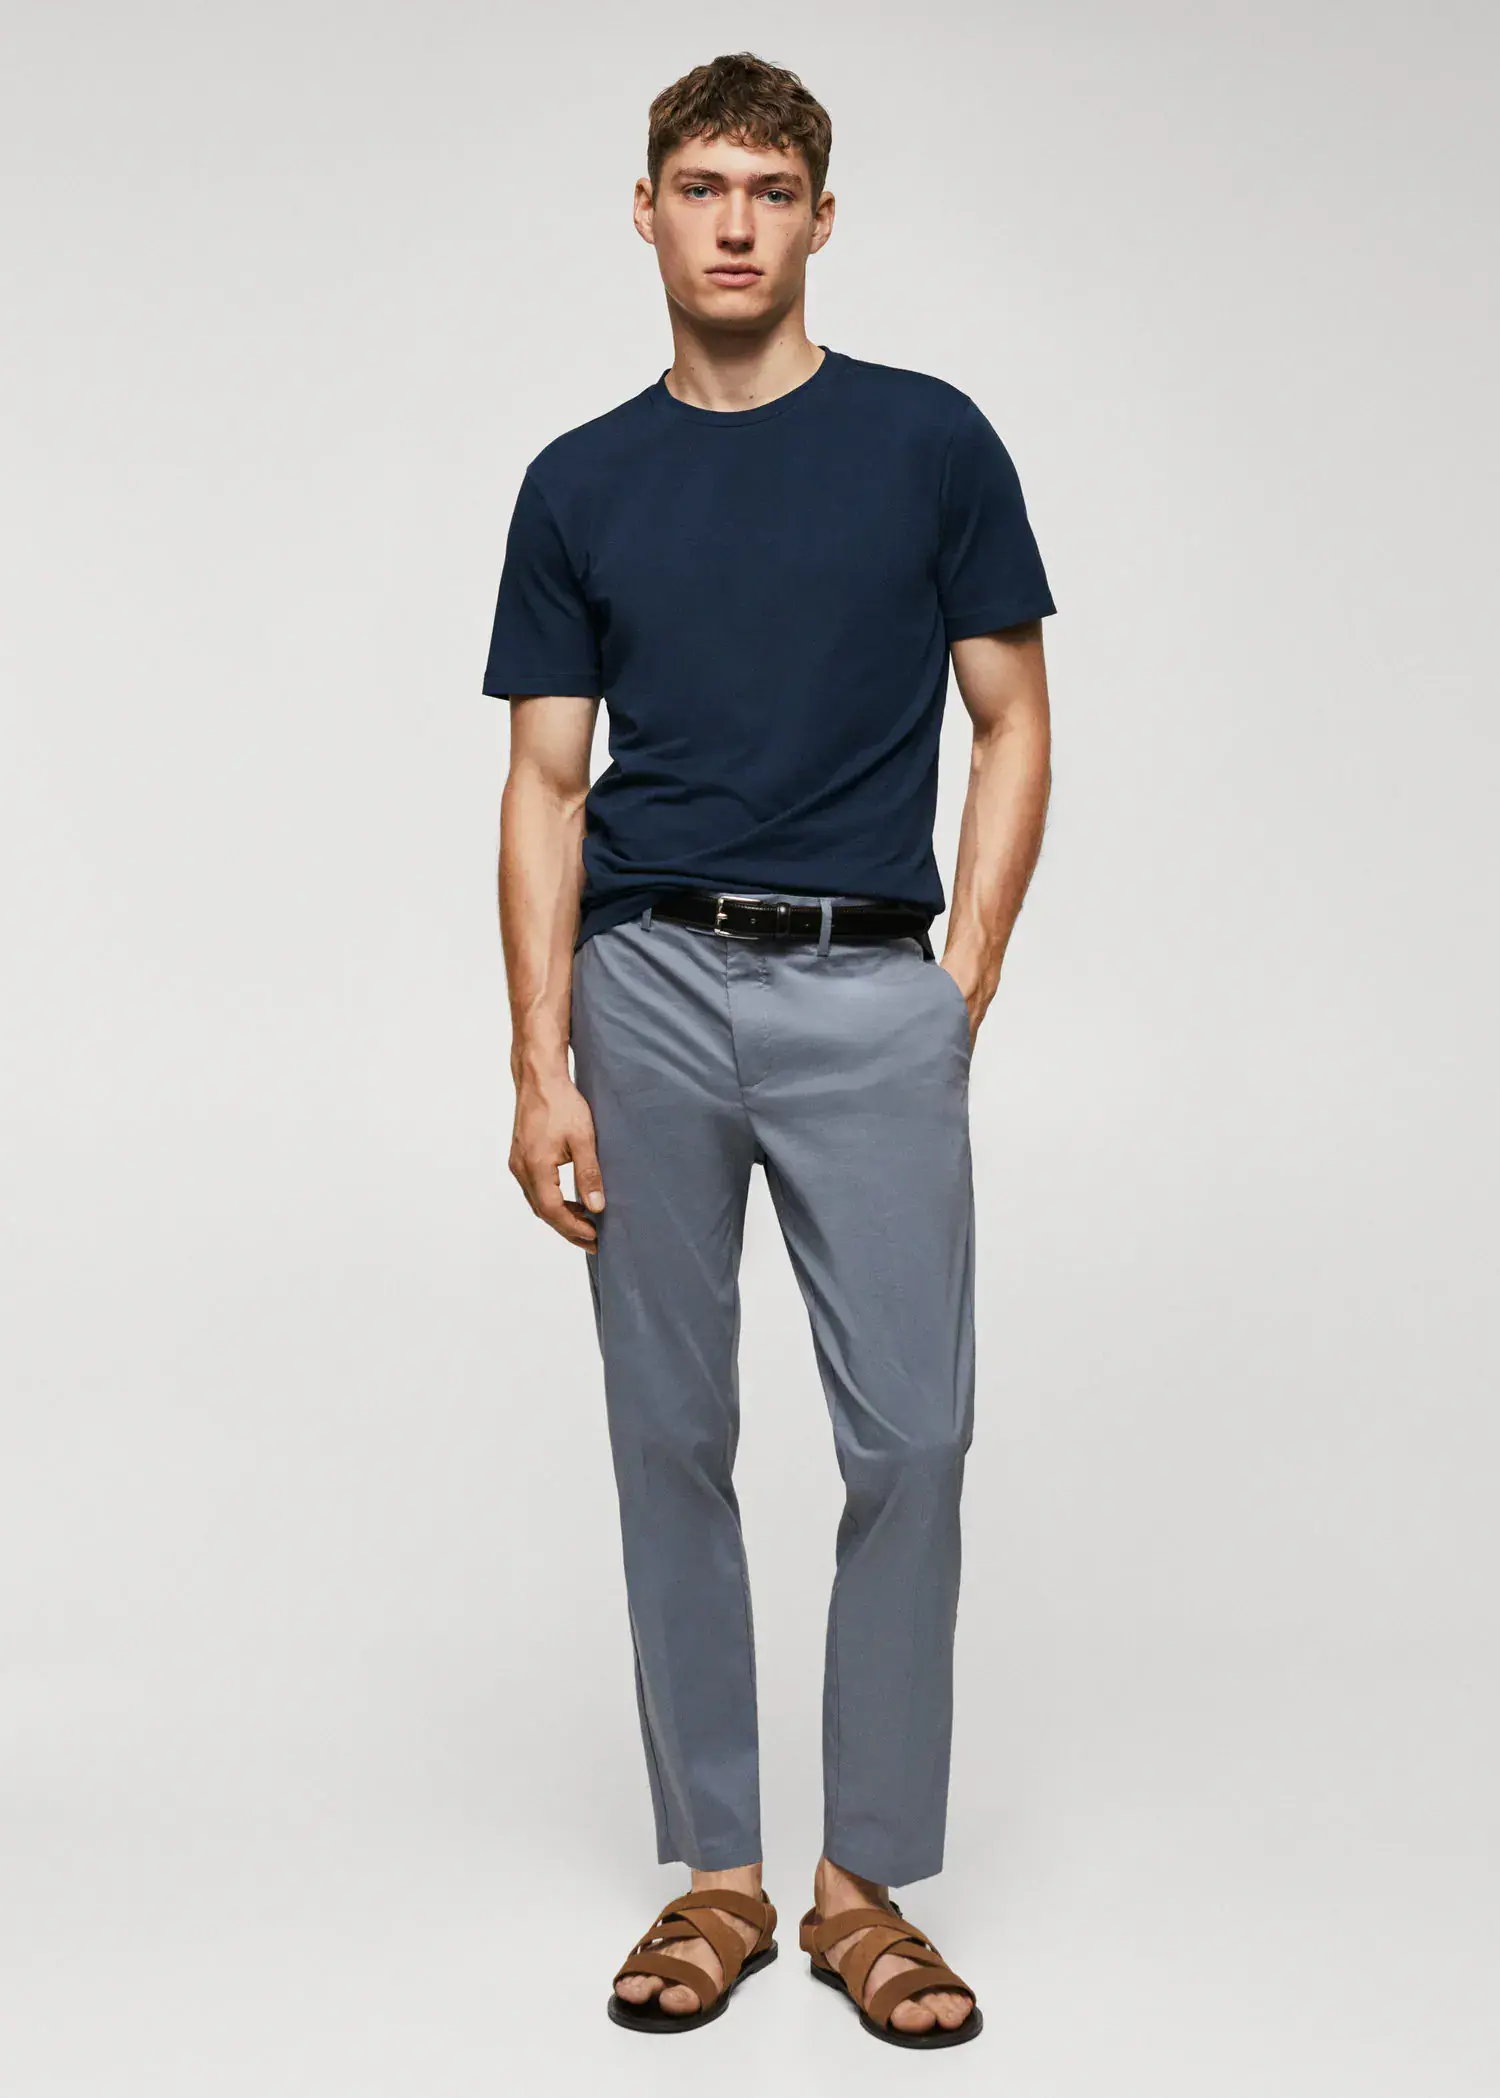 Mango Basic lightweight cotton t-shirt. a man wearing a blue shirt and gray pants. 